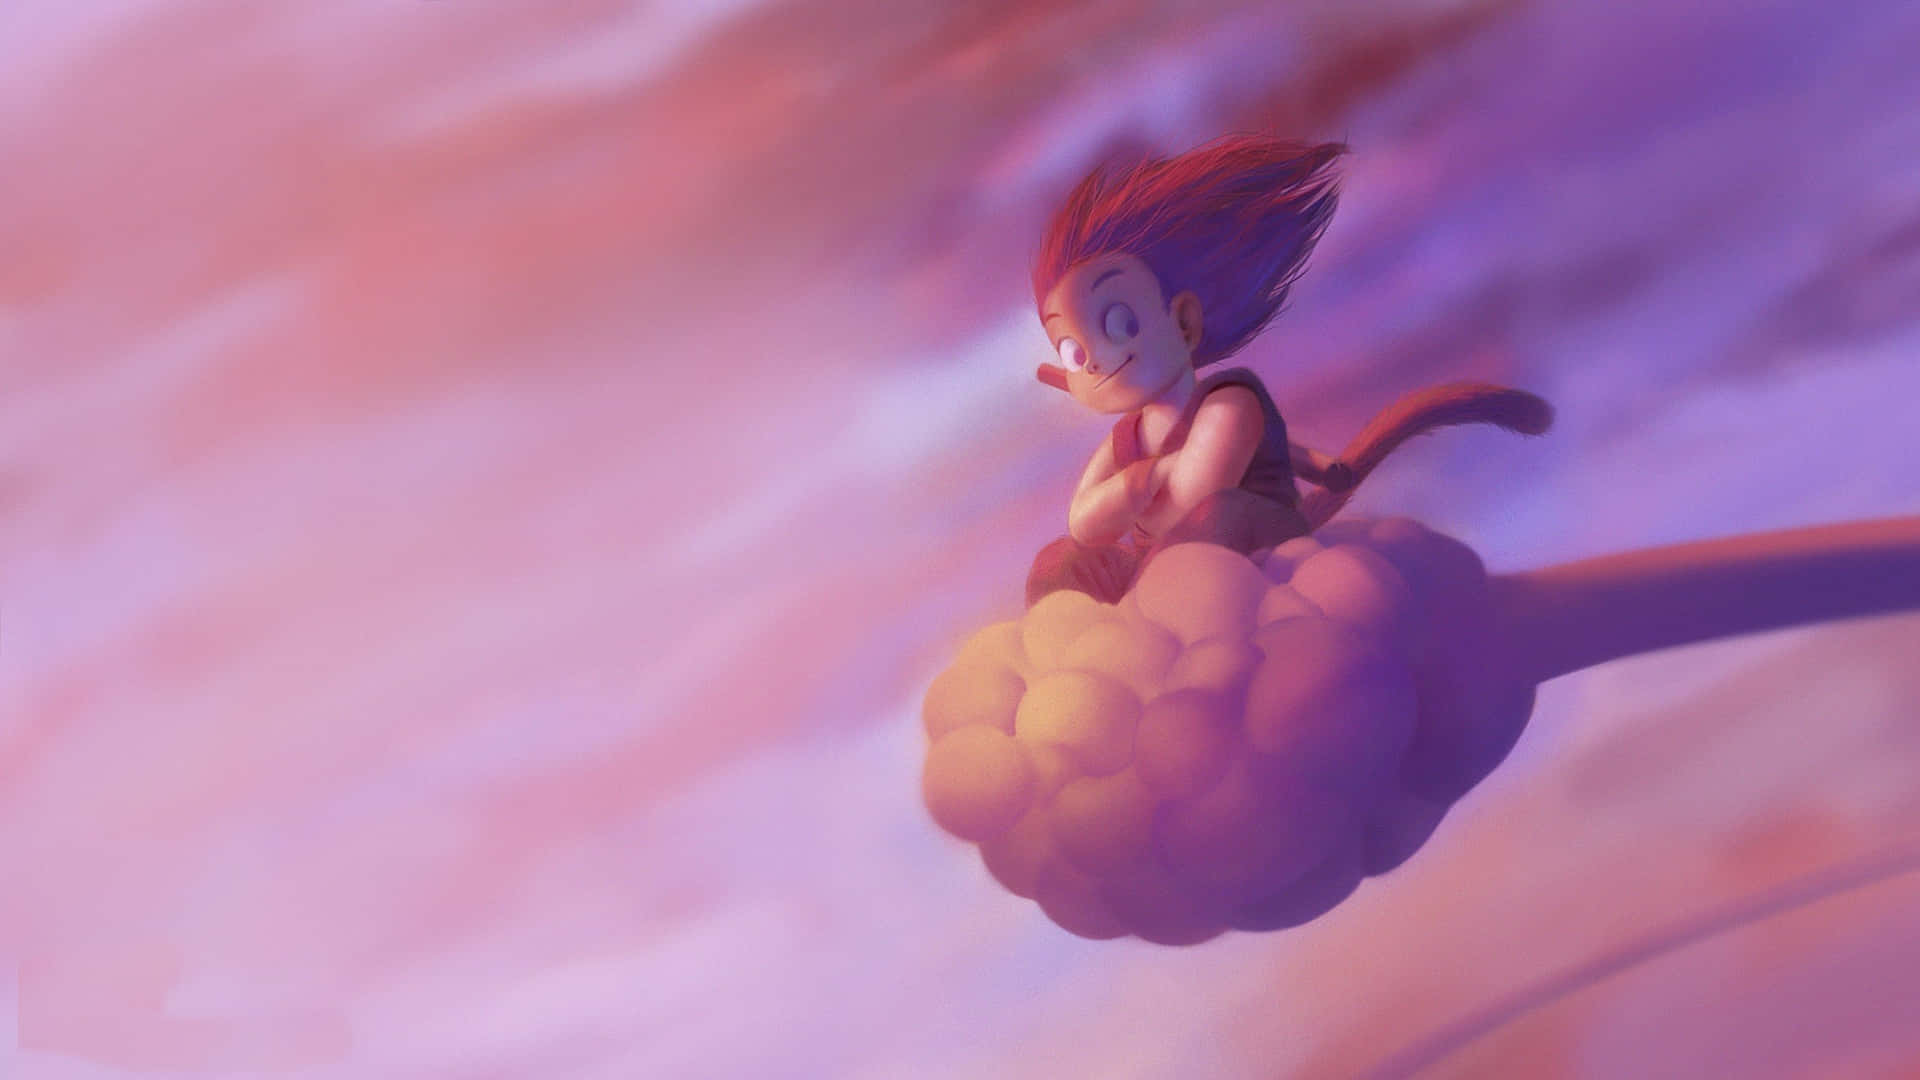 Kid Goku Flying Through the Air Wallpaper